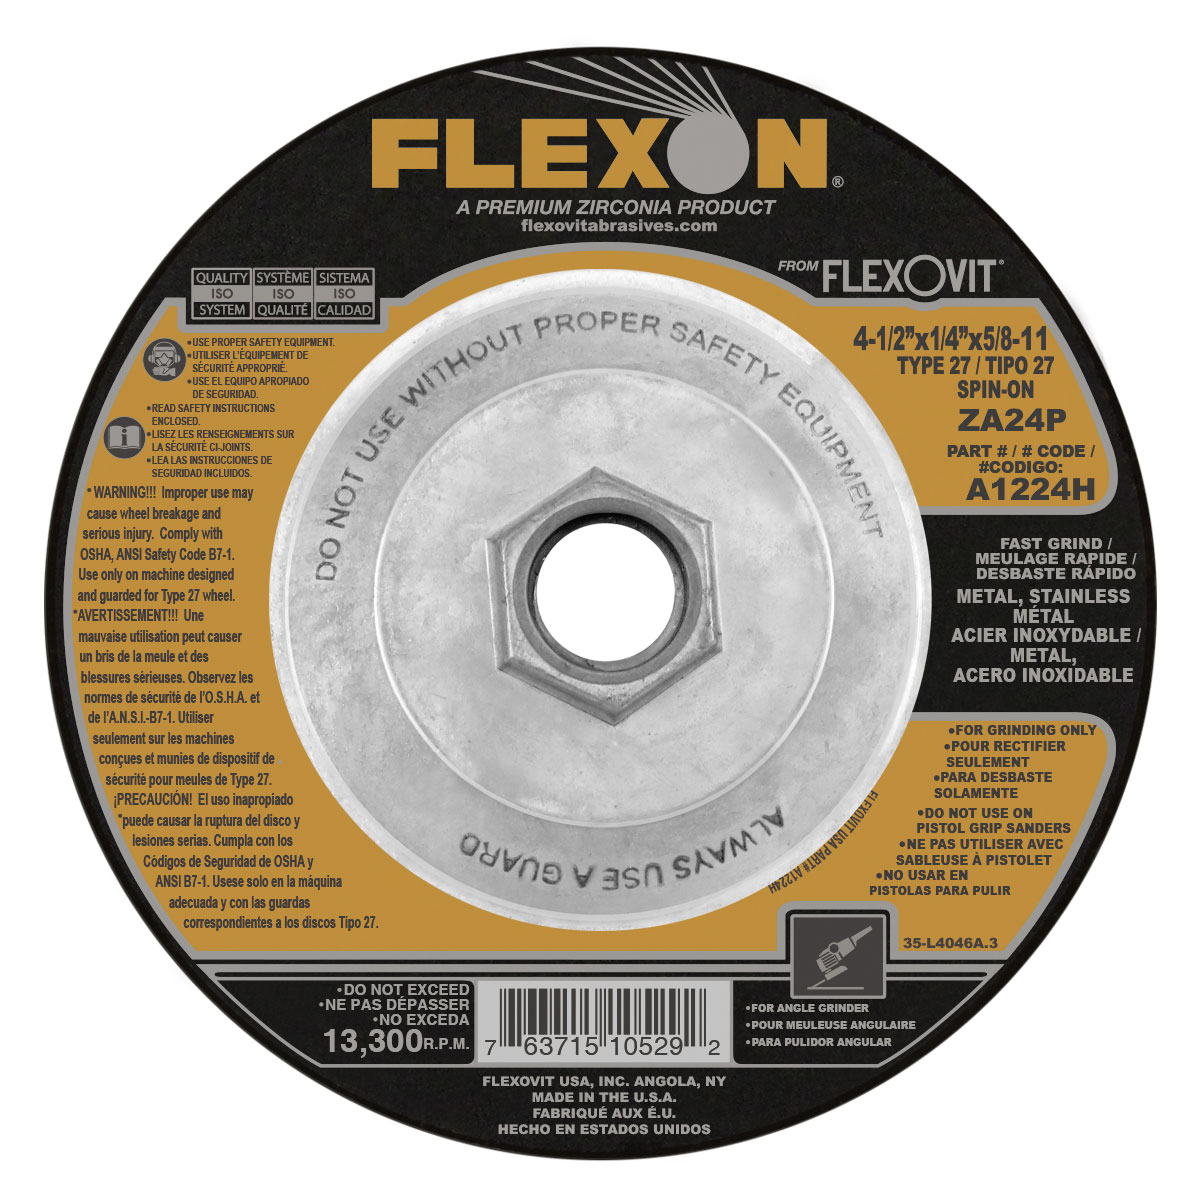 Item # Type Wheel USA, Flexovit 27 On A1224H, Grinding